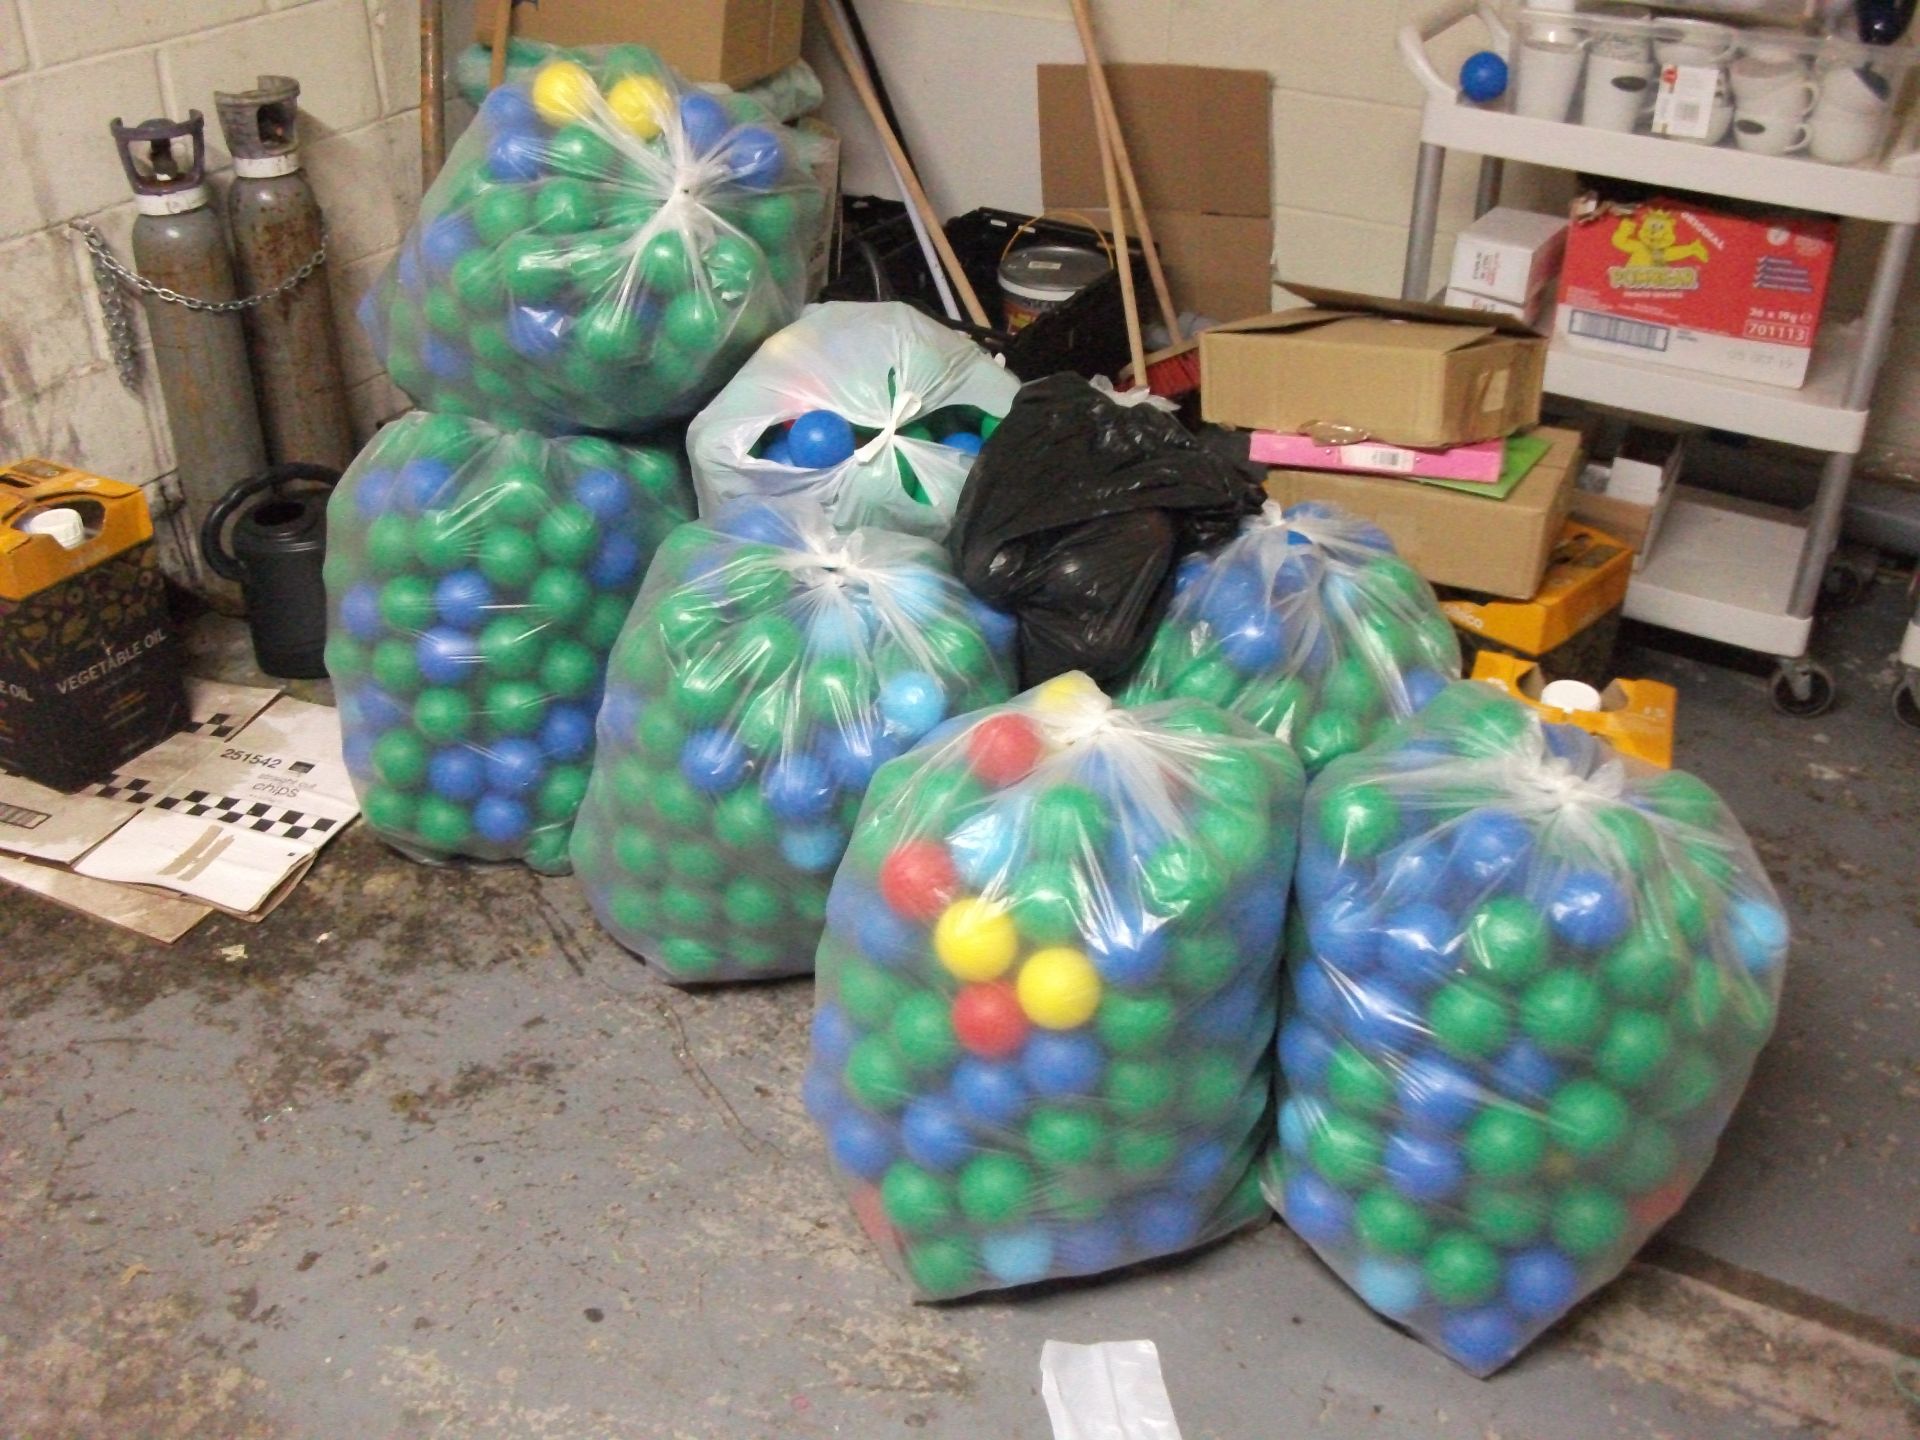 Quantity of Plastic Ball Pool Balls to 8 Bags